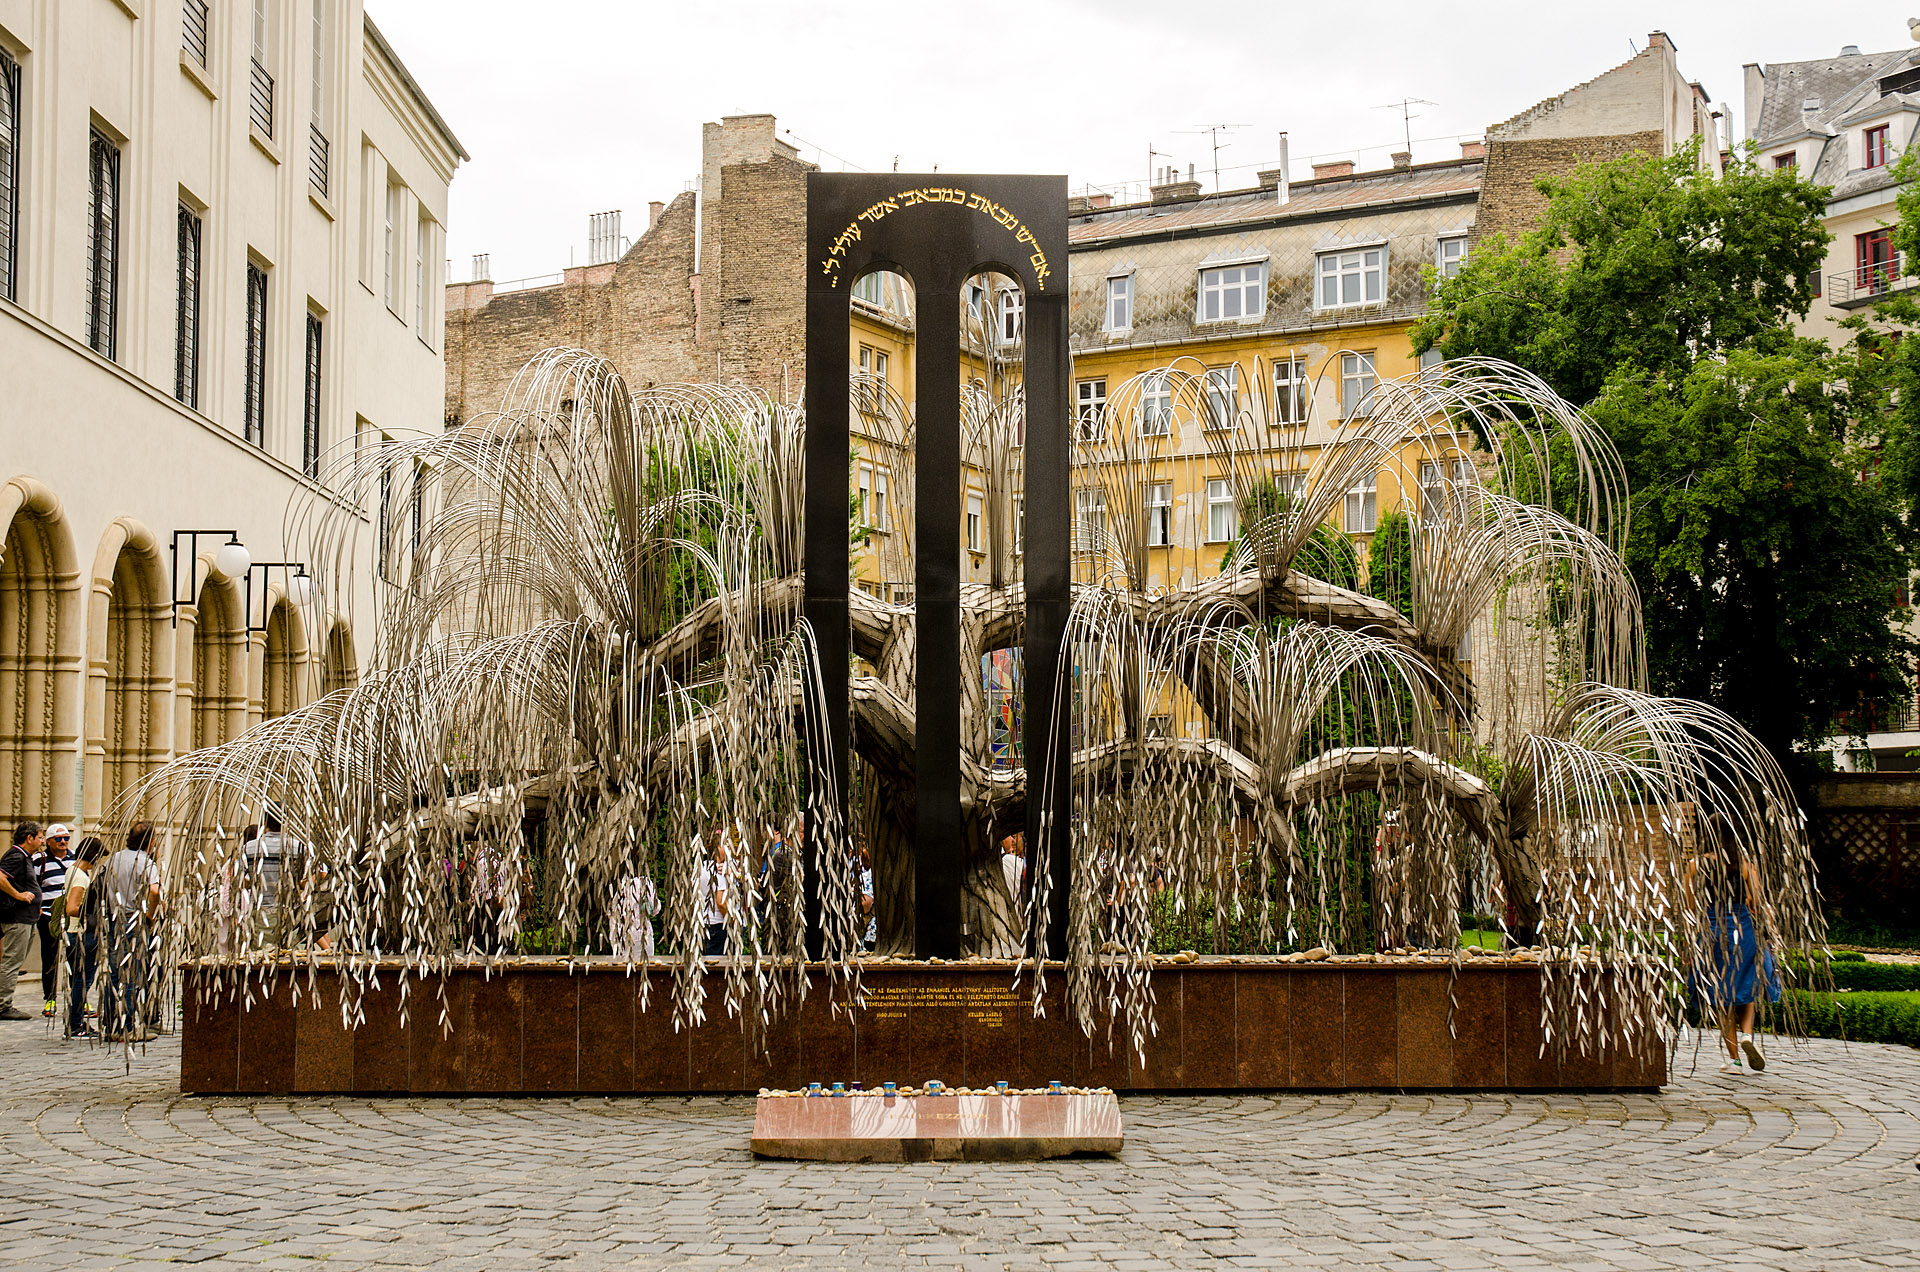 Emanuel Tree (Dohany Street Synagogue) - memorial to Hungarian Jews